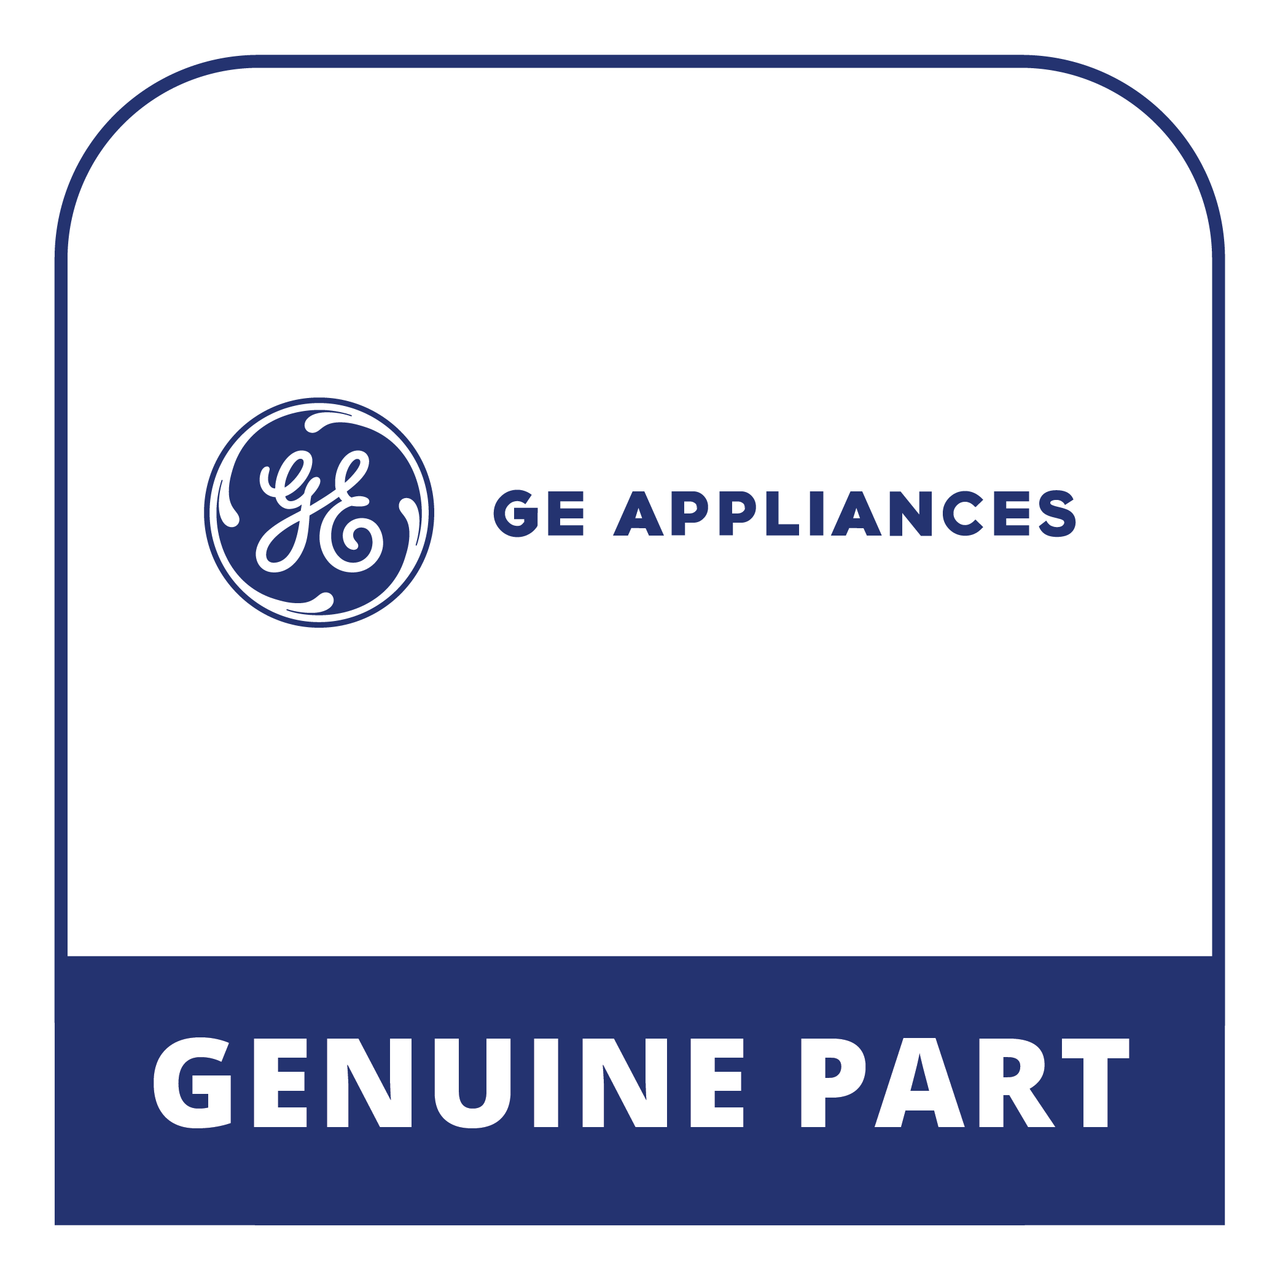 GE Appliances WB39K10026 - Slide & Bearing Asm - Genuine Part